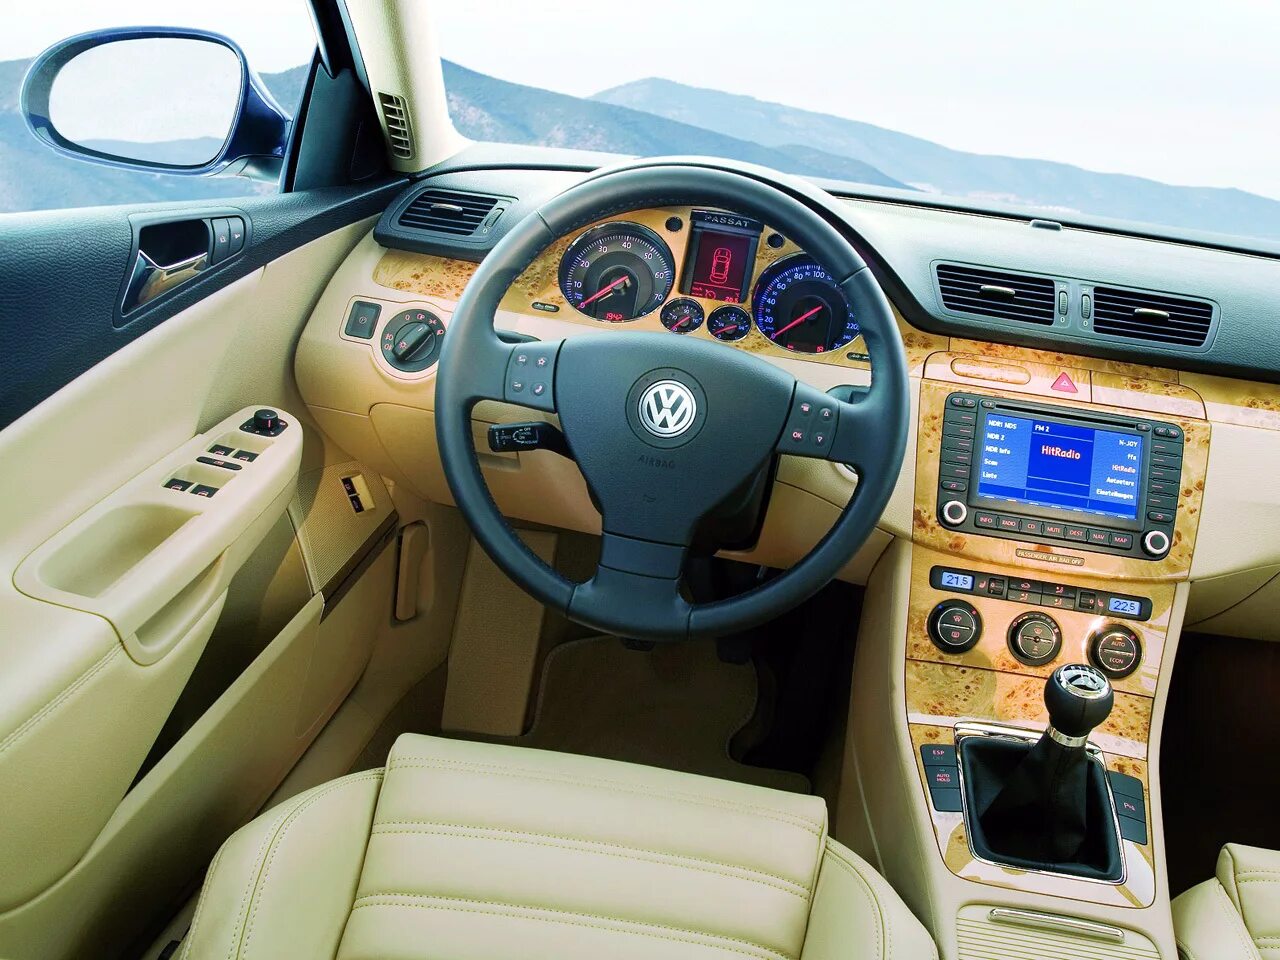 Фольксваген пассат б6 автомат. Фольксваген Пассат b6 салон. Volkswagen Passat 2006 салон. Volkswagen Passat b6 салон. Volkswagen Passat 2005 Interior.